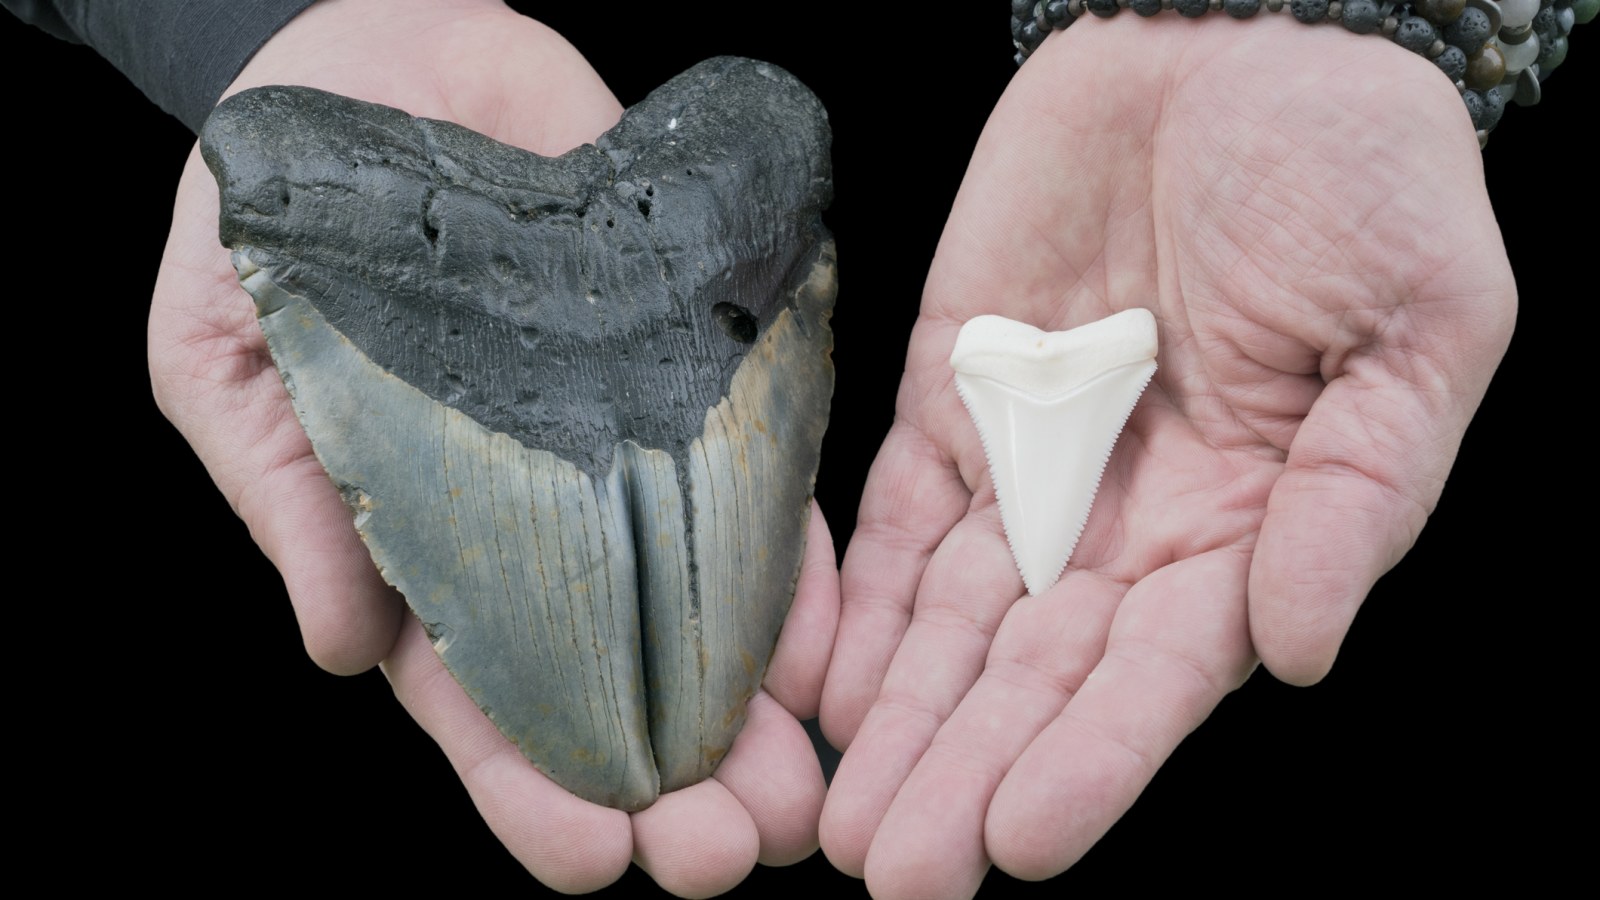 https://d.newsweek.com/en/full/1592951/megalodon-gemination-vs-great-white-shark-tooth-stock-photo.jpg?w=1600&h=900&q=88&f=bb849faf2d9b3981cd9c30b498f1433a